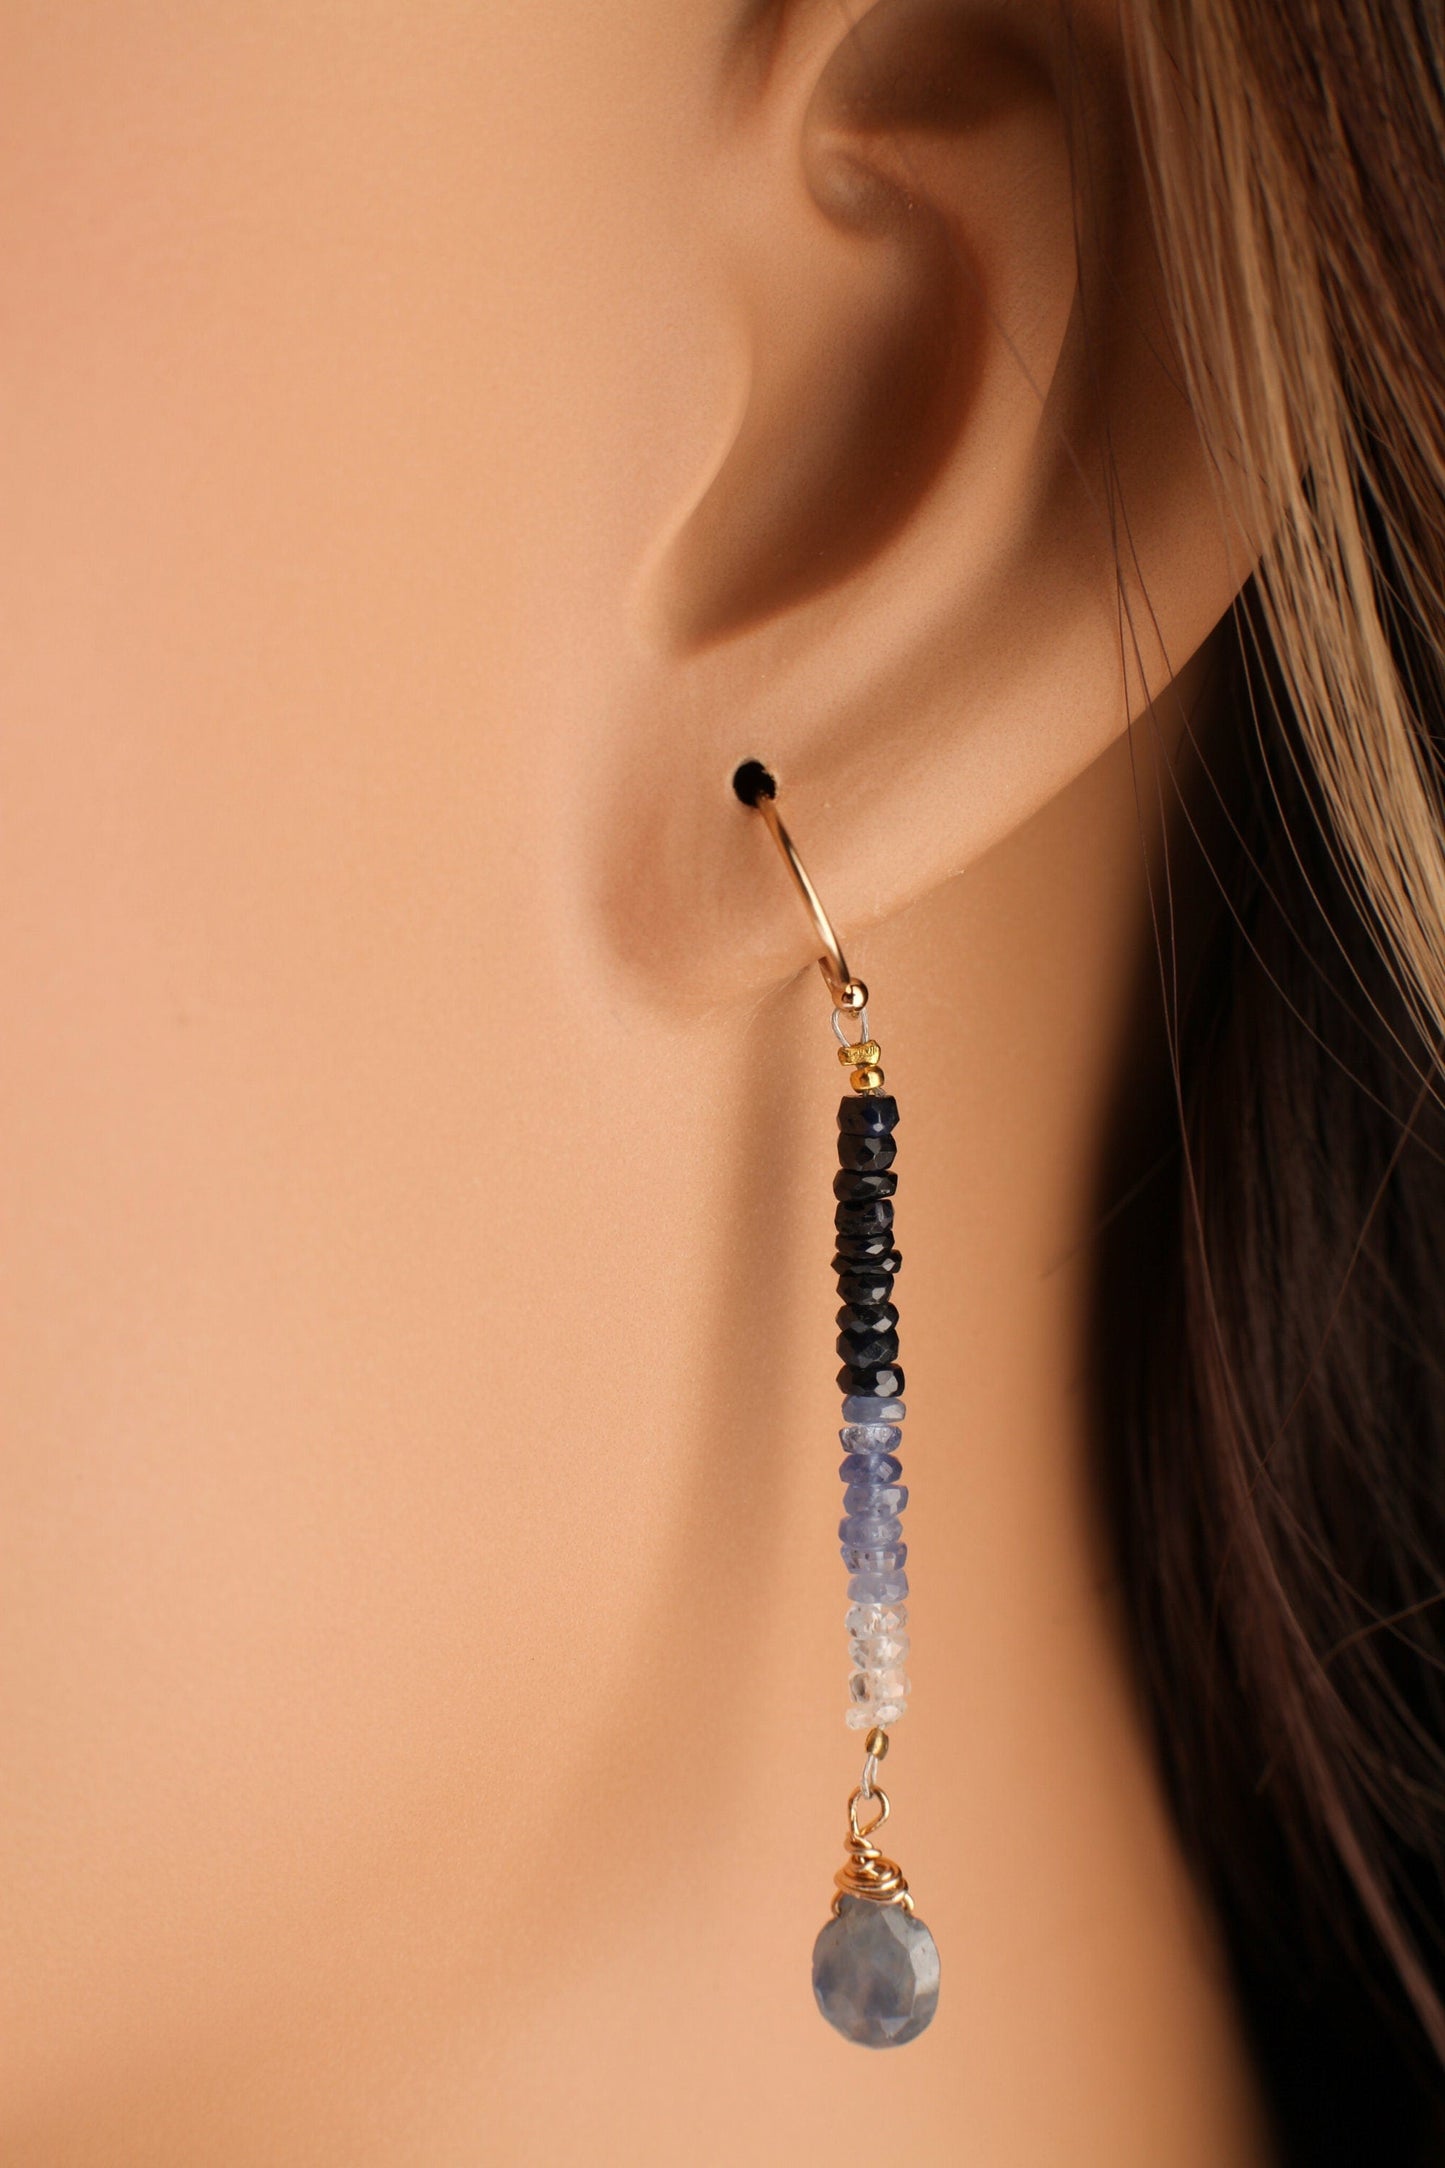 Ombre sapphire earnings Faceted 6x8mm PearDrop& 3mm roundel ombre sapphire 14K Gold Filled Hook Ear Wire or Leverback earrings.Elegantgift